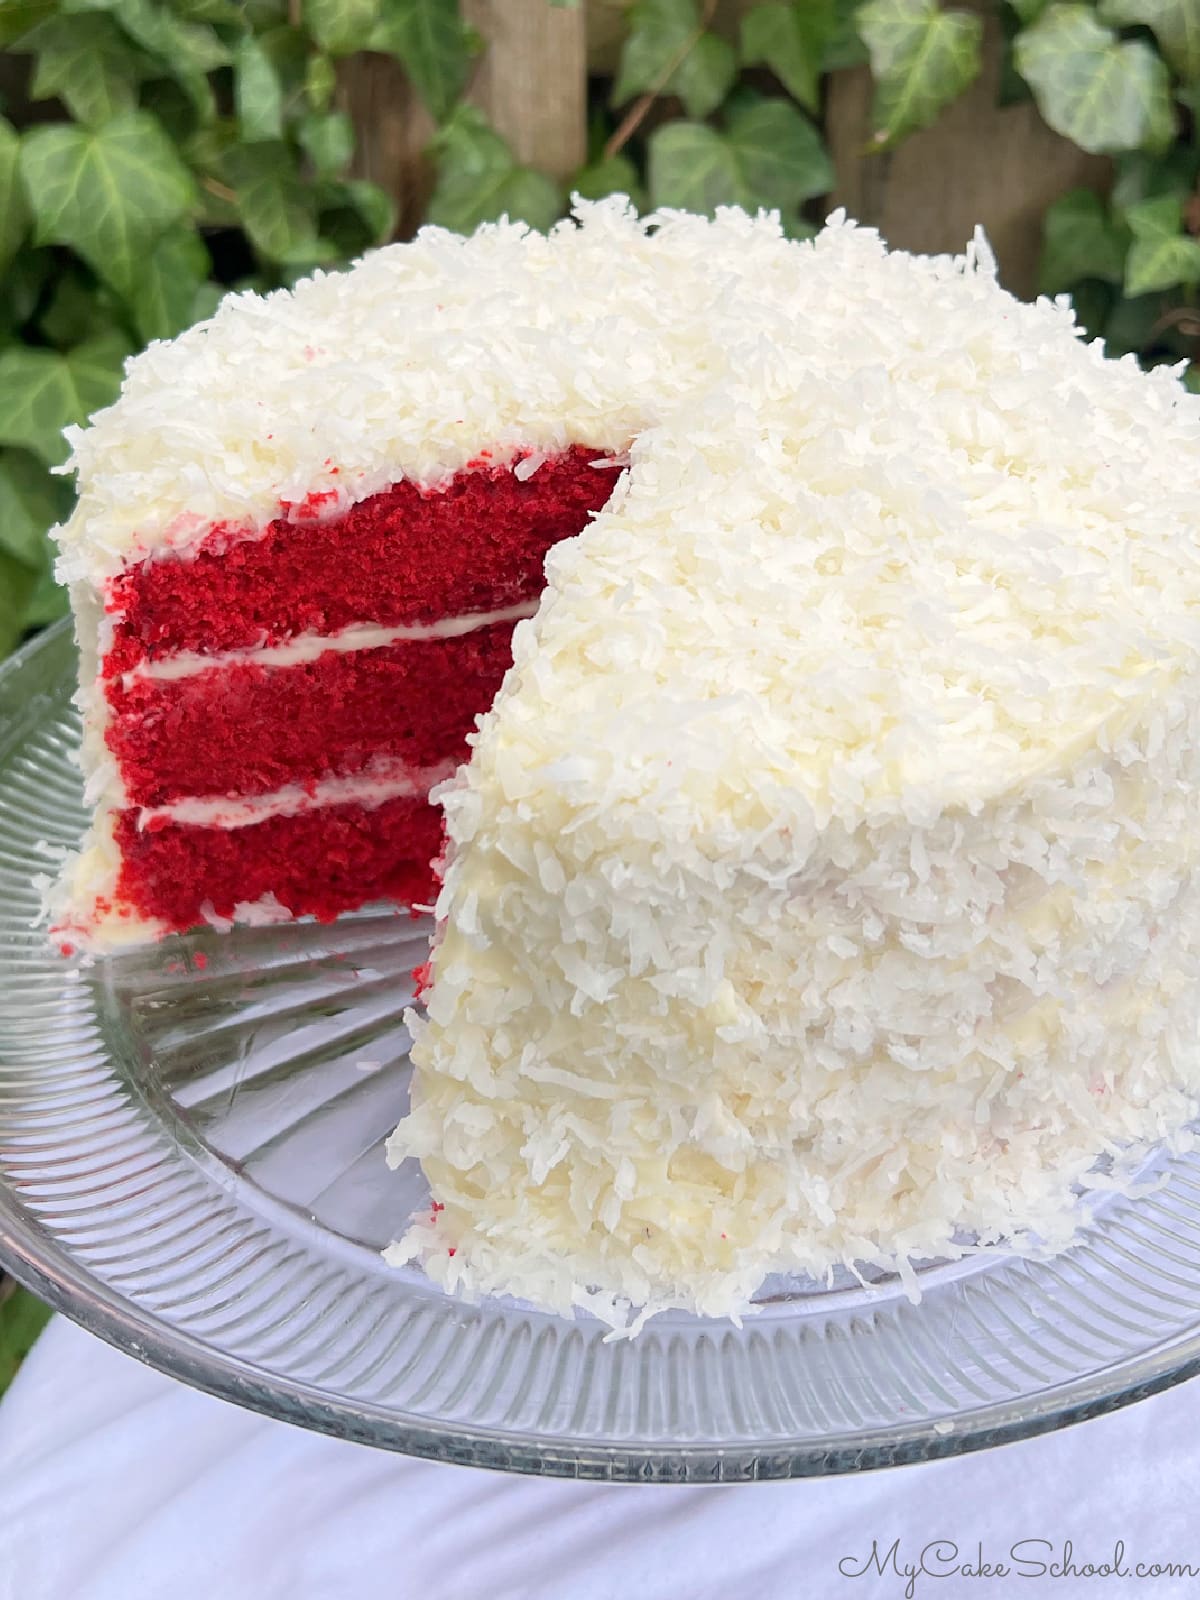 Sliced red velvet coconut cake layers on a cake pedestal.